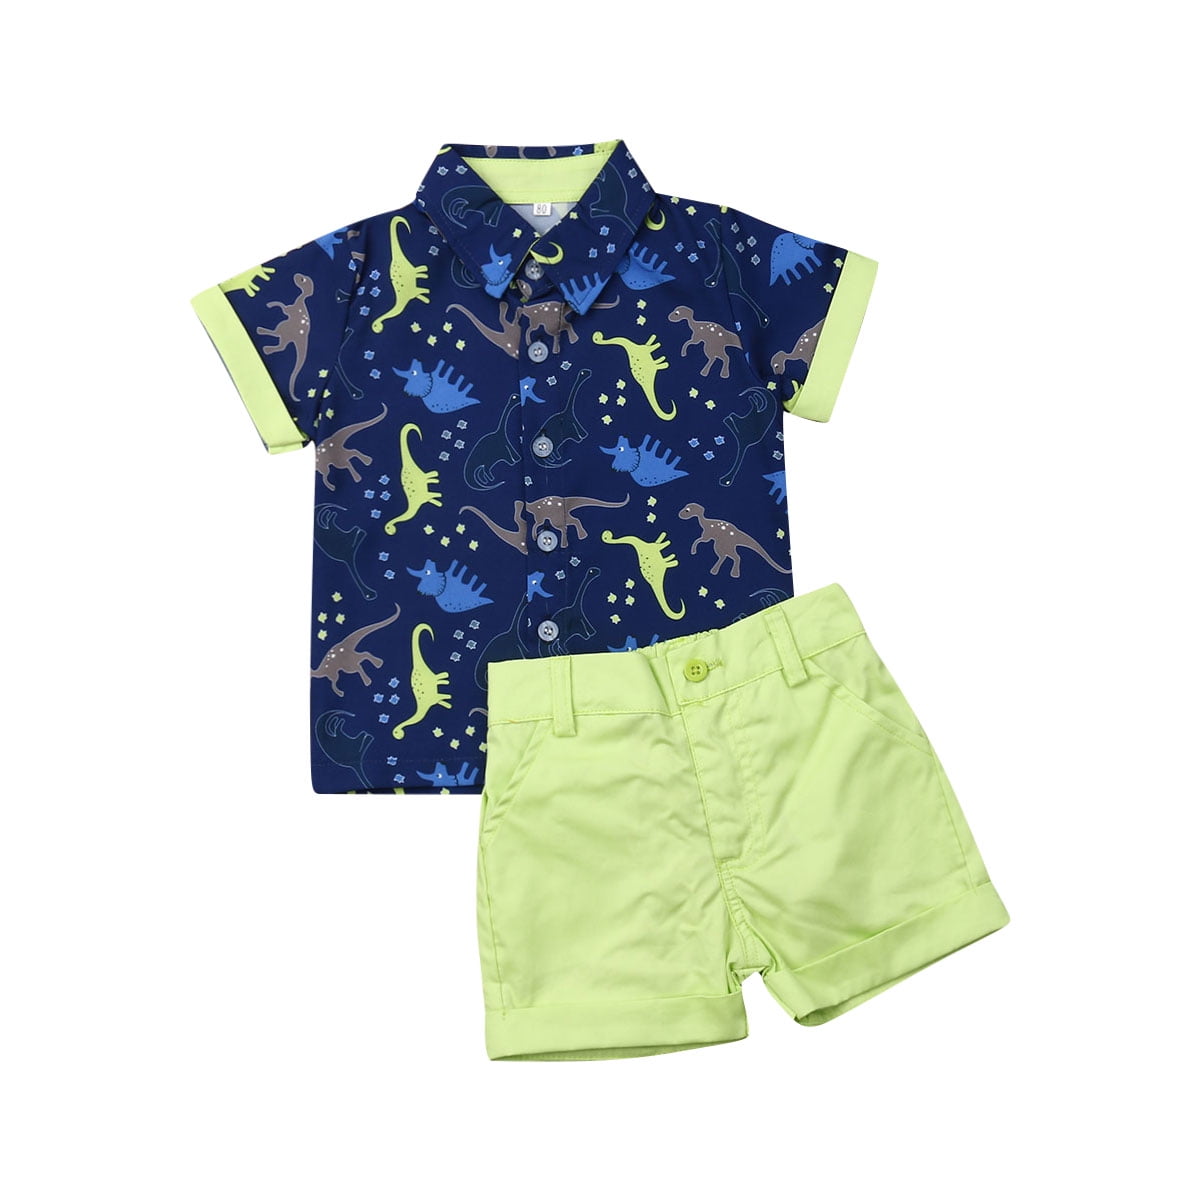 erthome Baby Clothes 1-7 Years Toddler Baby Boy Short Sleeve Cartoon Dinosaur Print Tops T-Shirt Shorts Pants Outfits Set Clothes